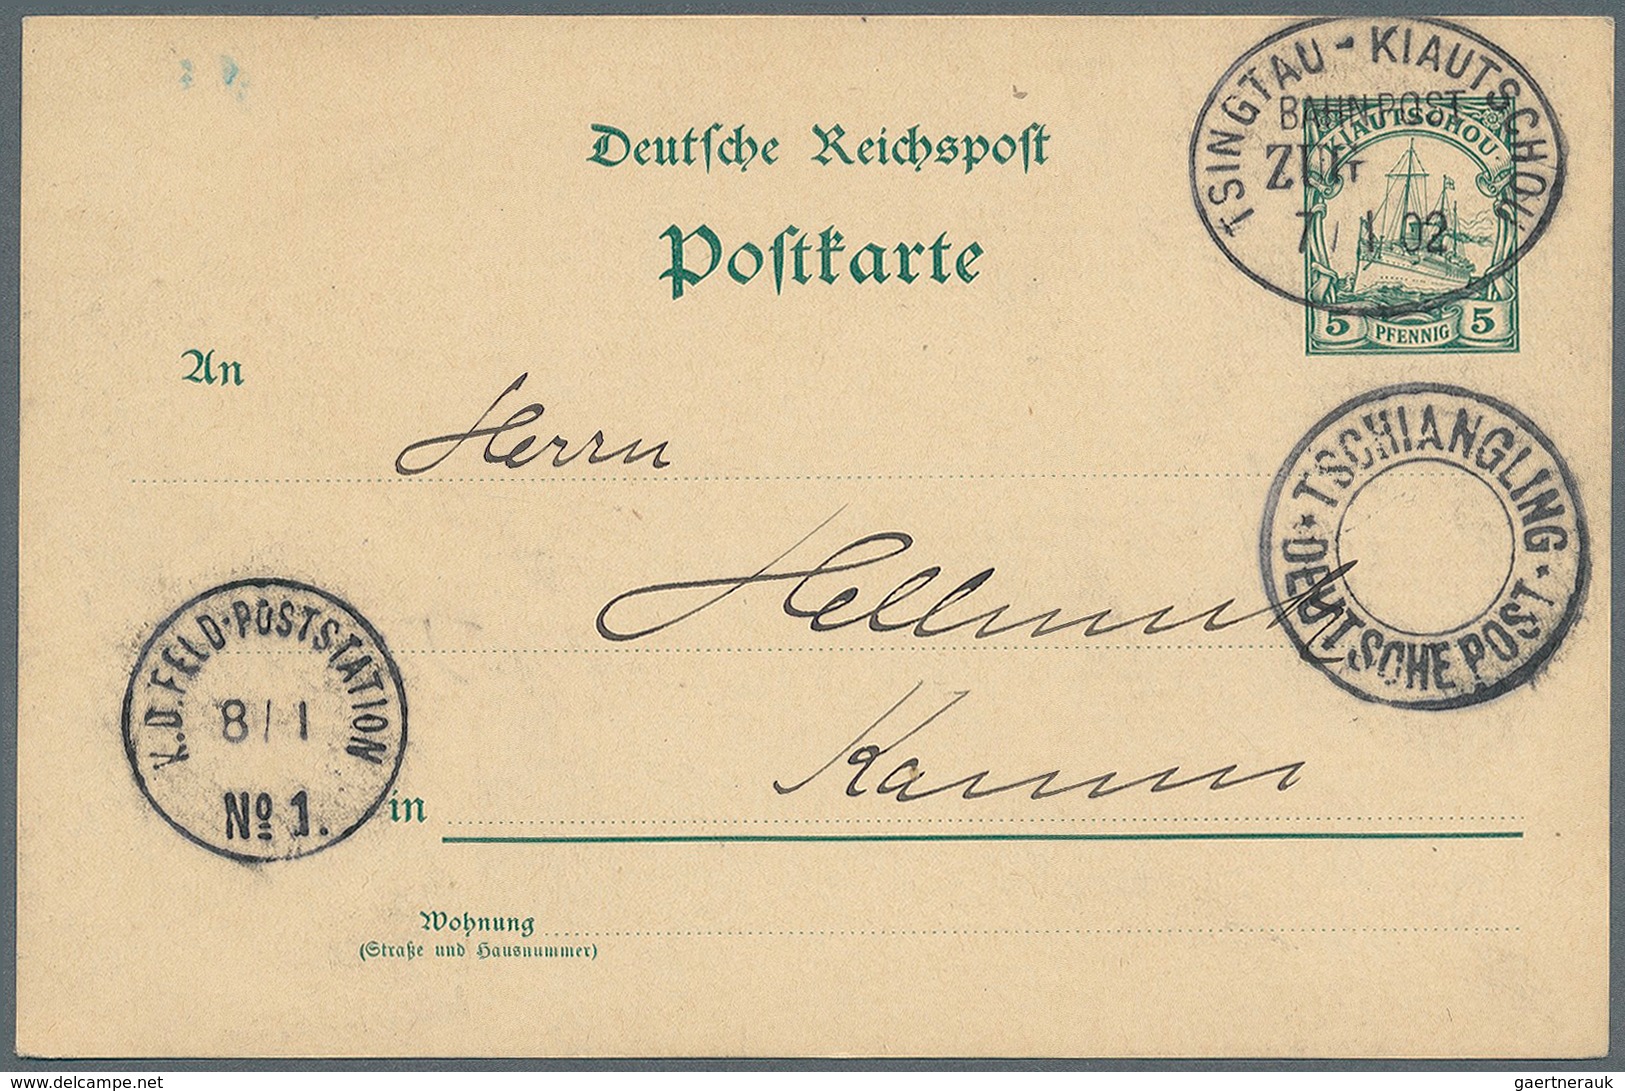 Deutsche Post In China - Stempel: 1902: "TSCHIANGLING / DEUTSCHE POST", Klarer K2 Ohne Datum Neben B - Deutsche Post In China